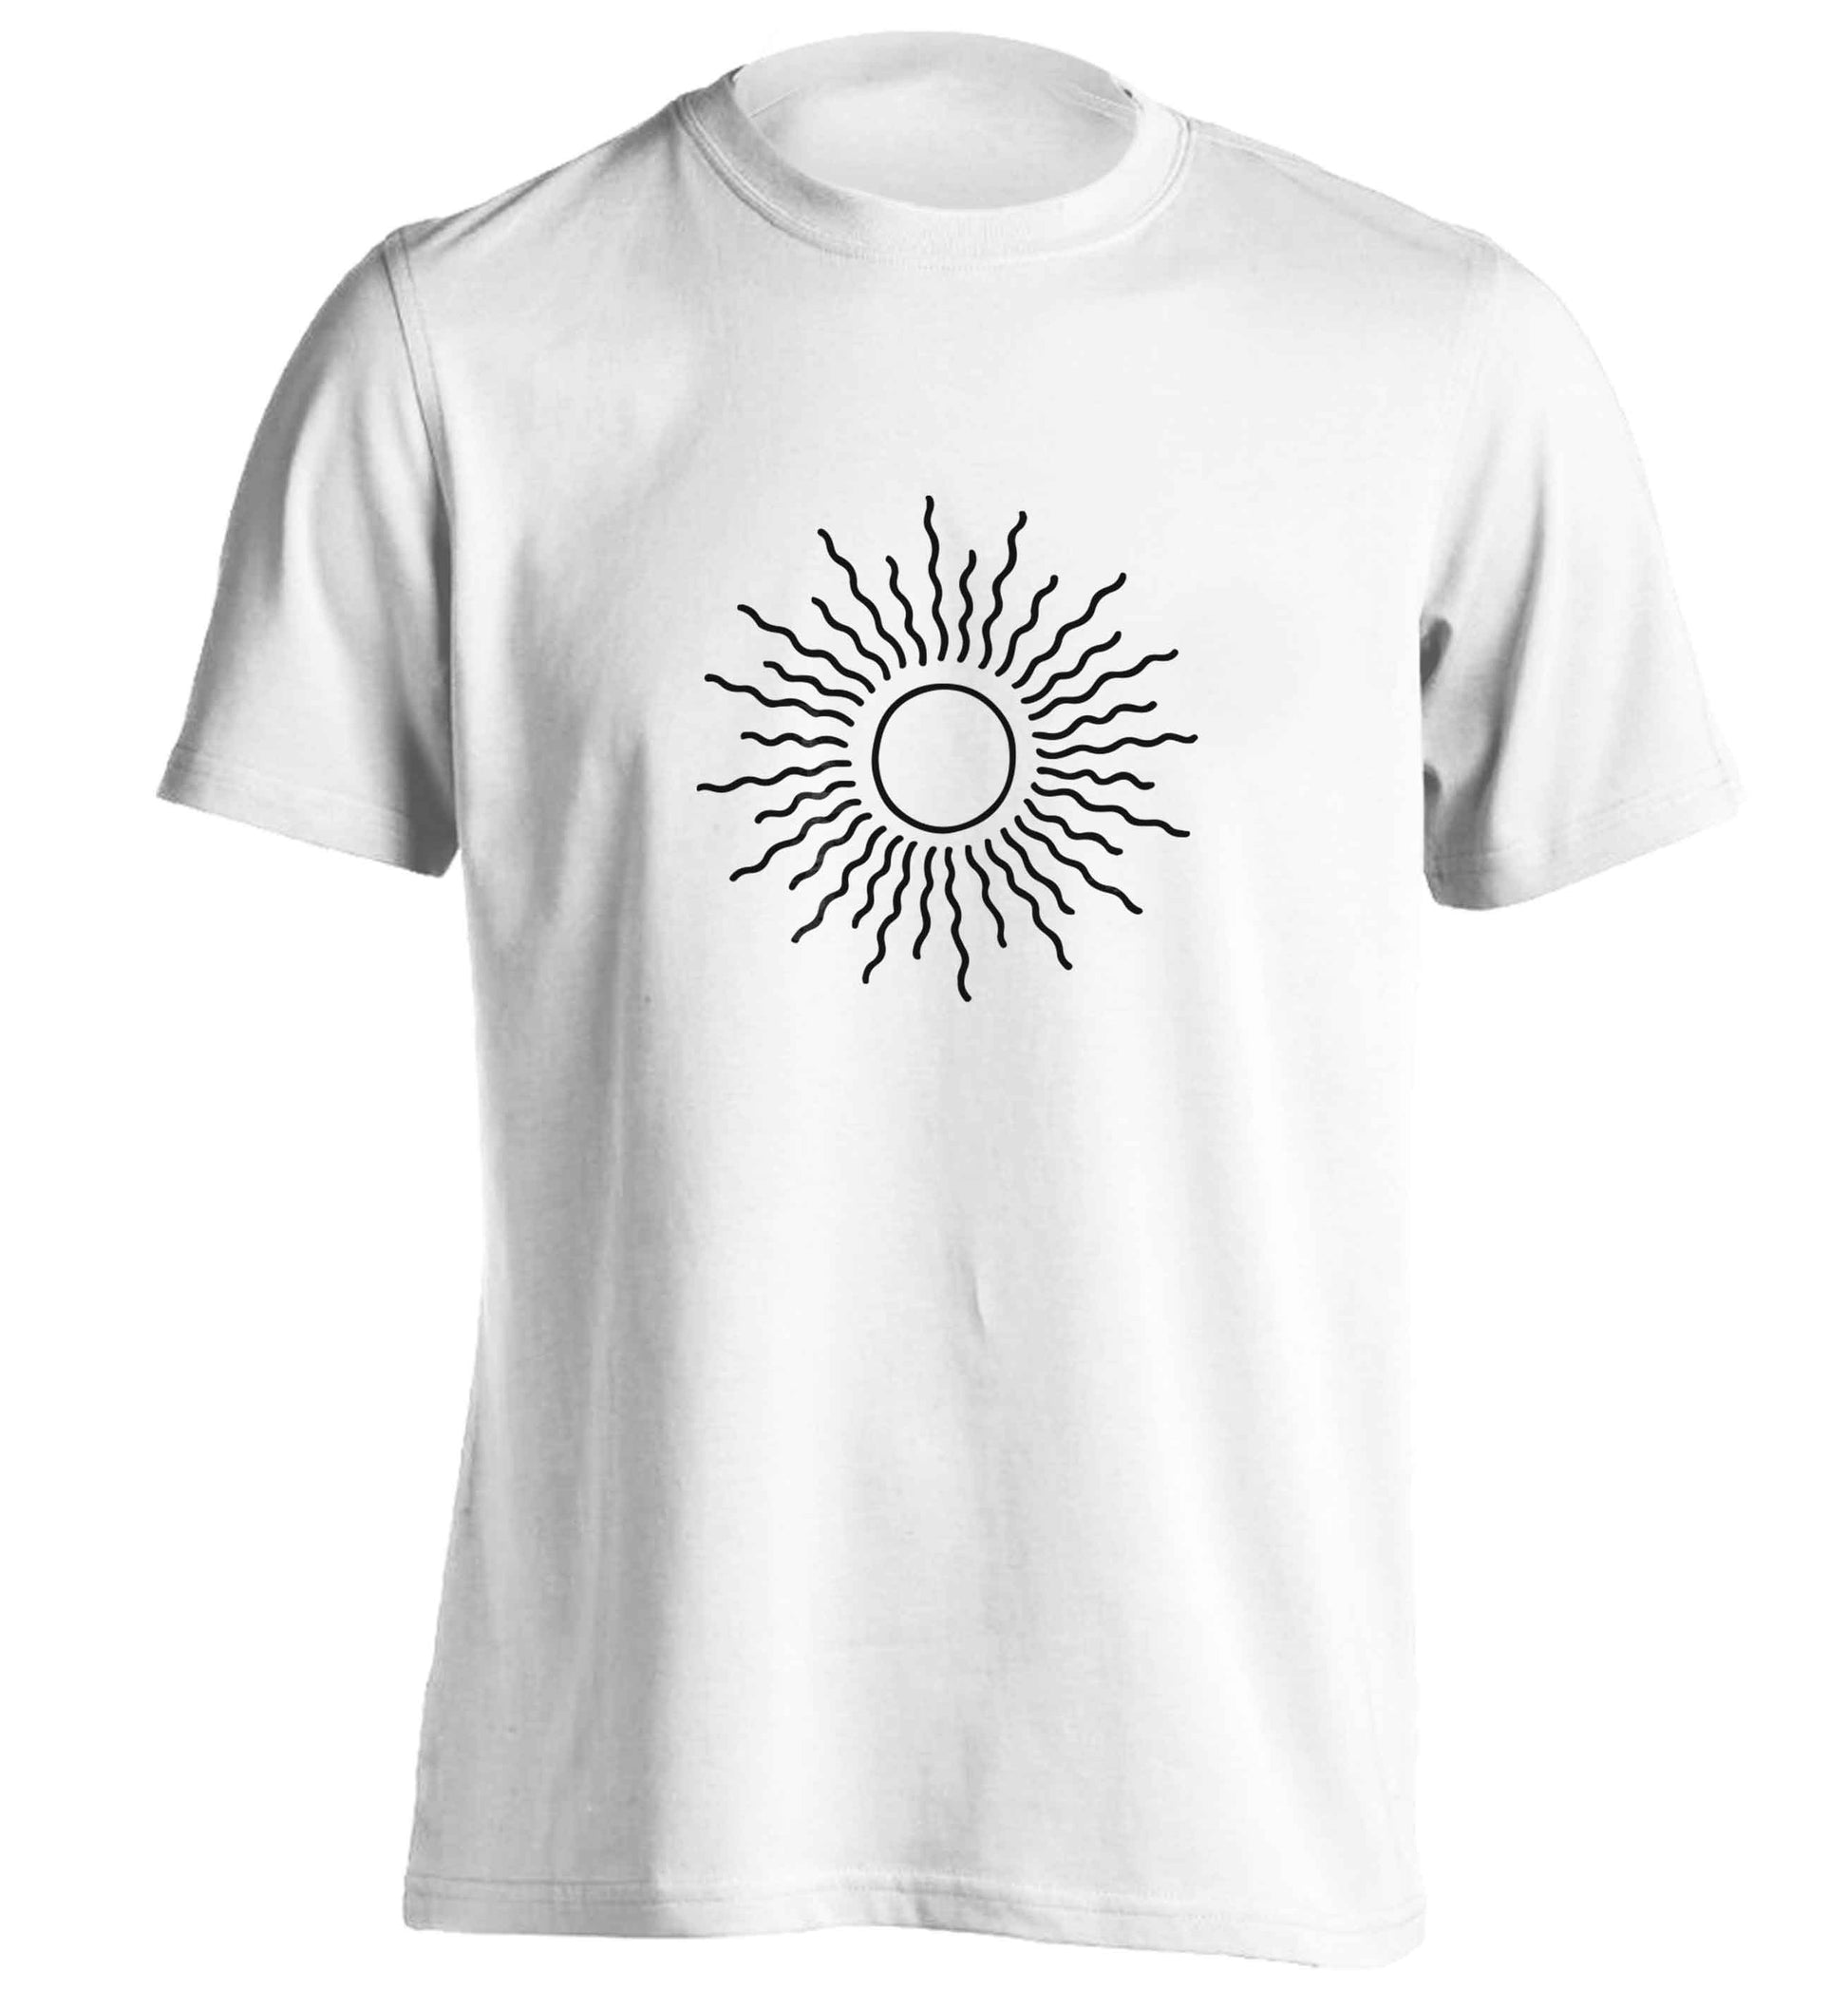 Sun illustration adults unisex white Tshirt 2XL